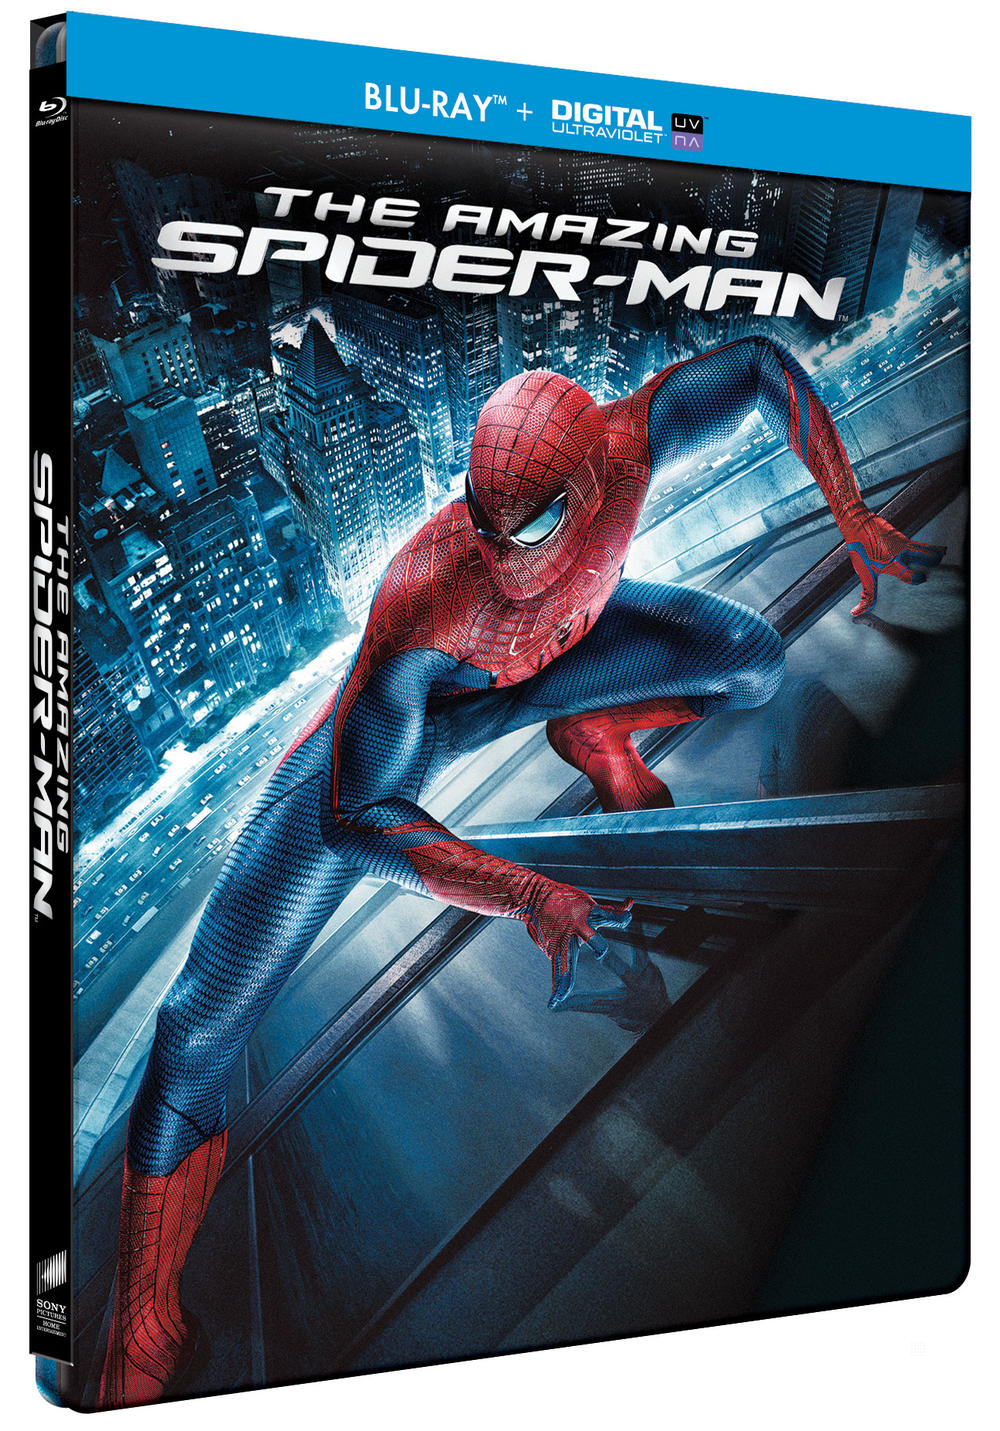 THE AMAZING SPIDER-MAN - Blu-ray